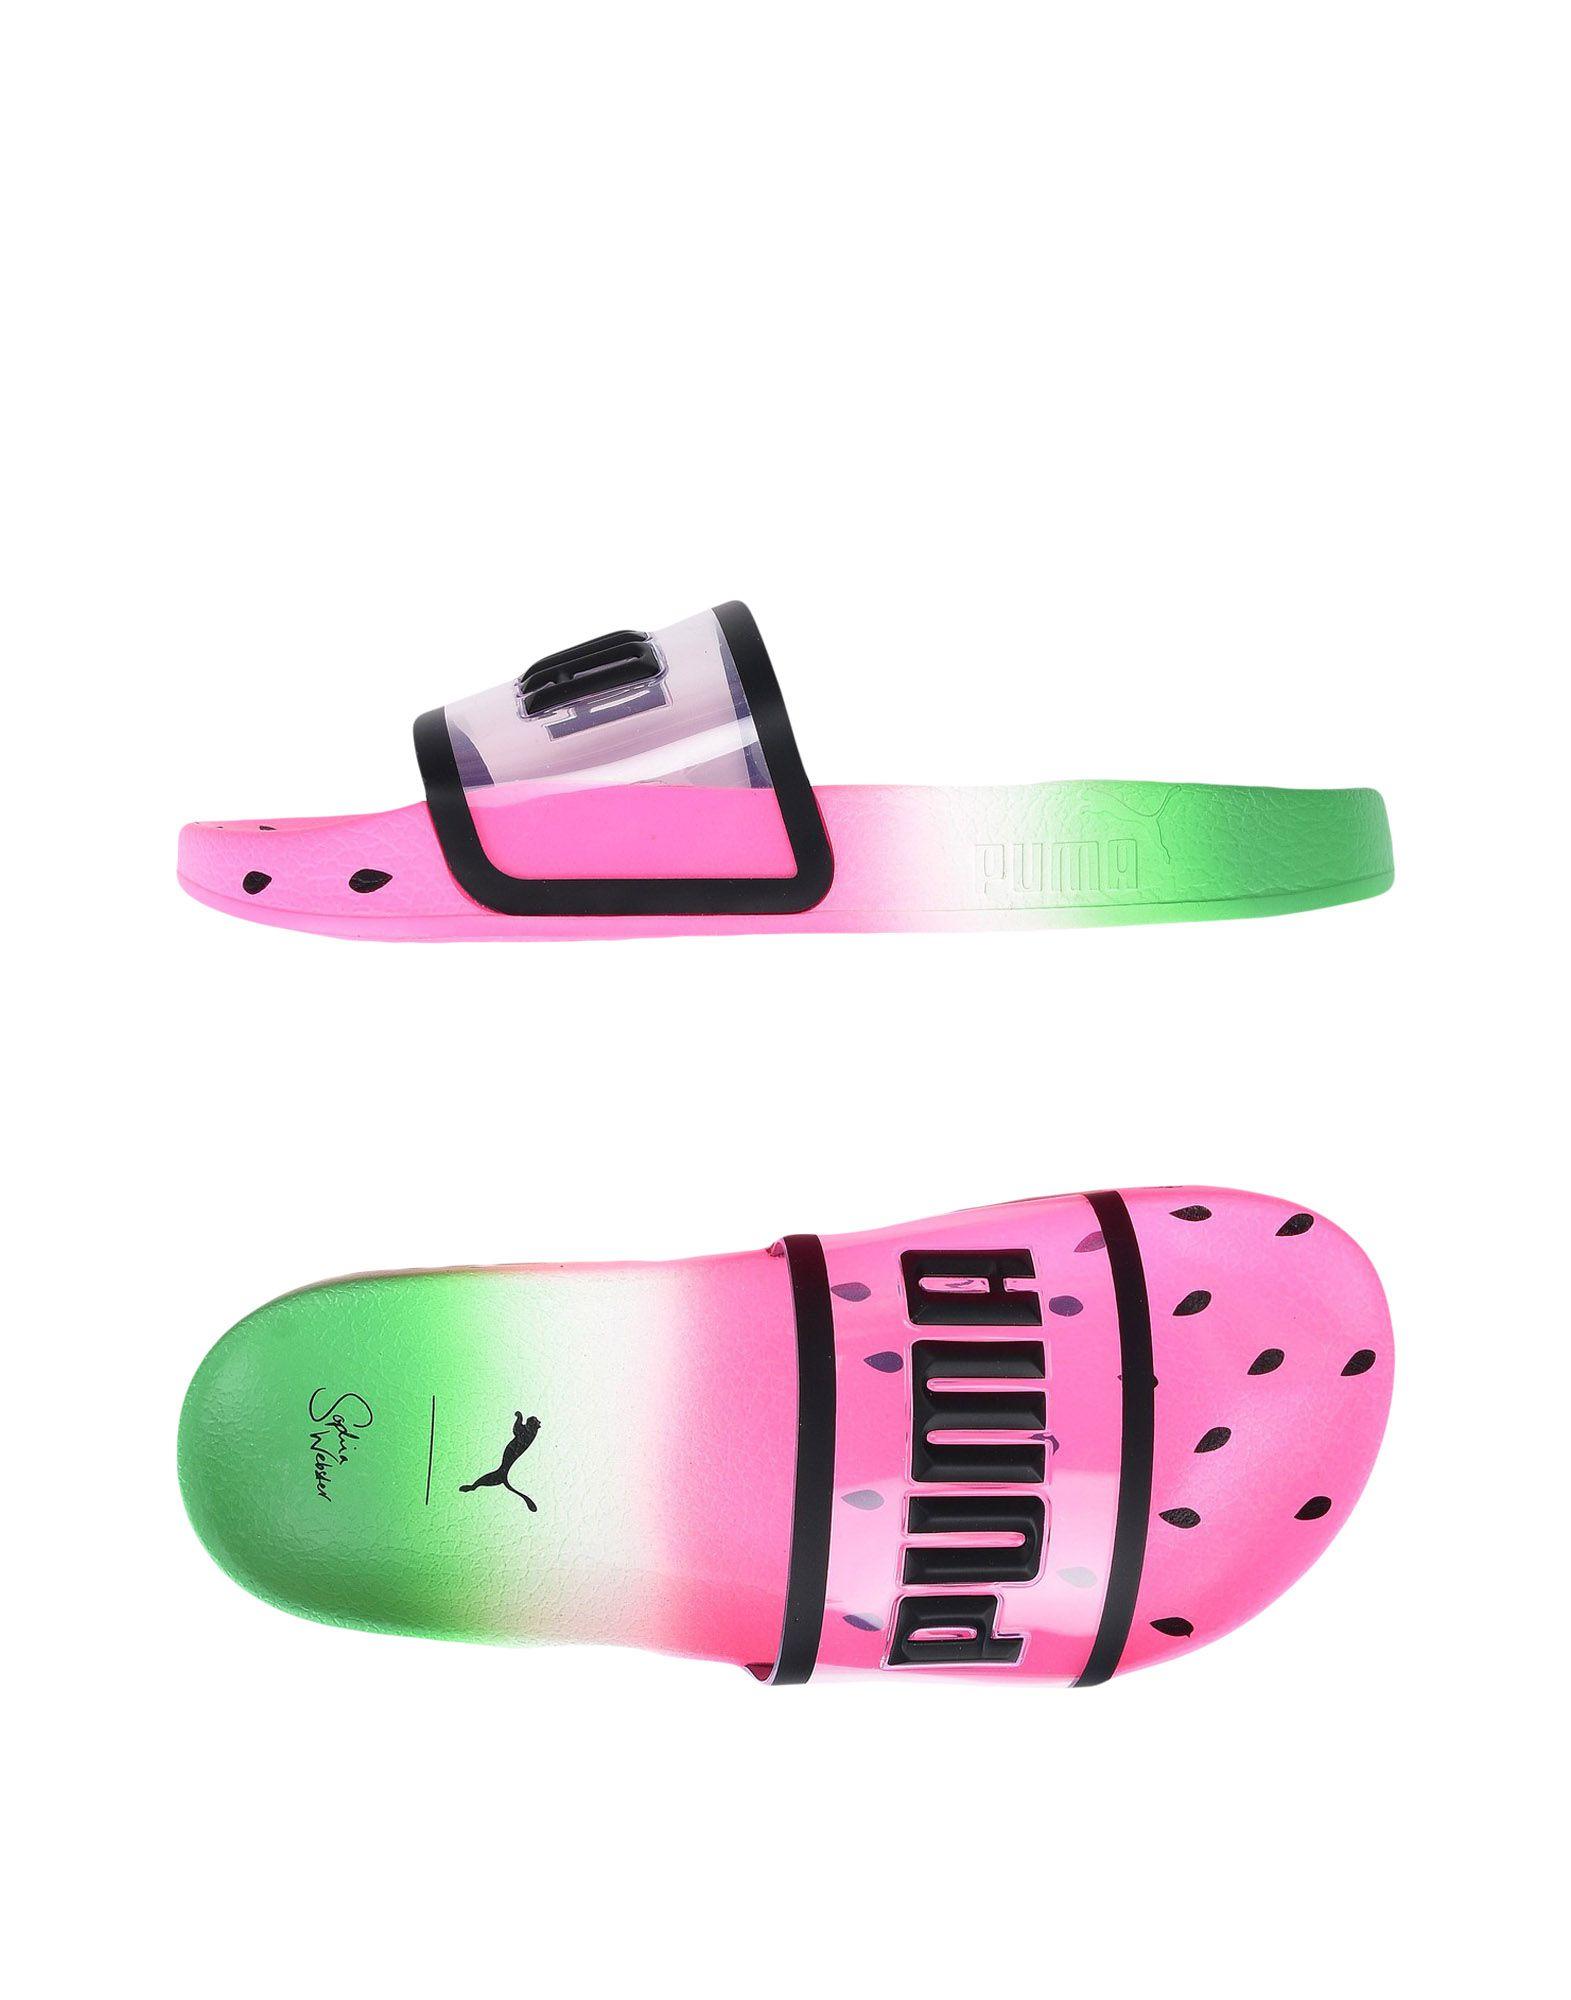 puma sophia webster sandals